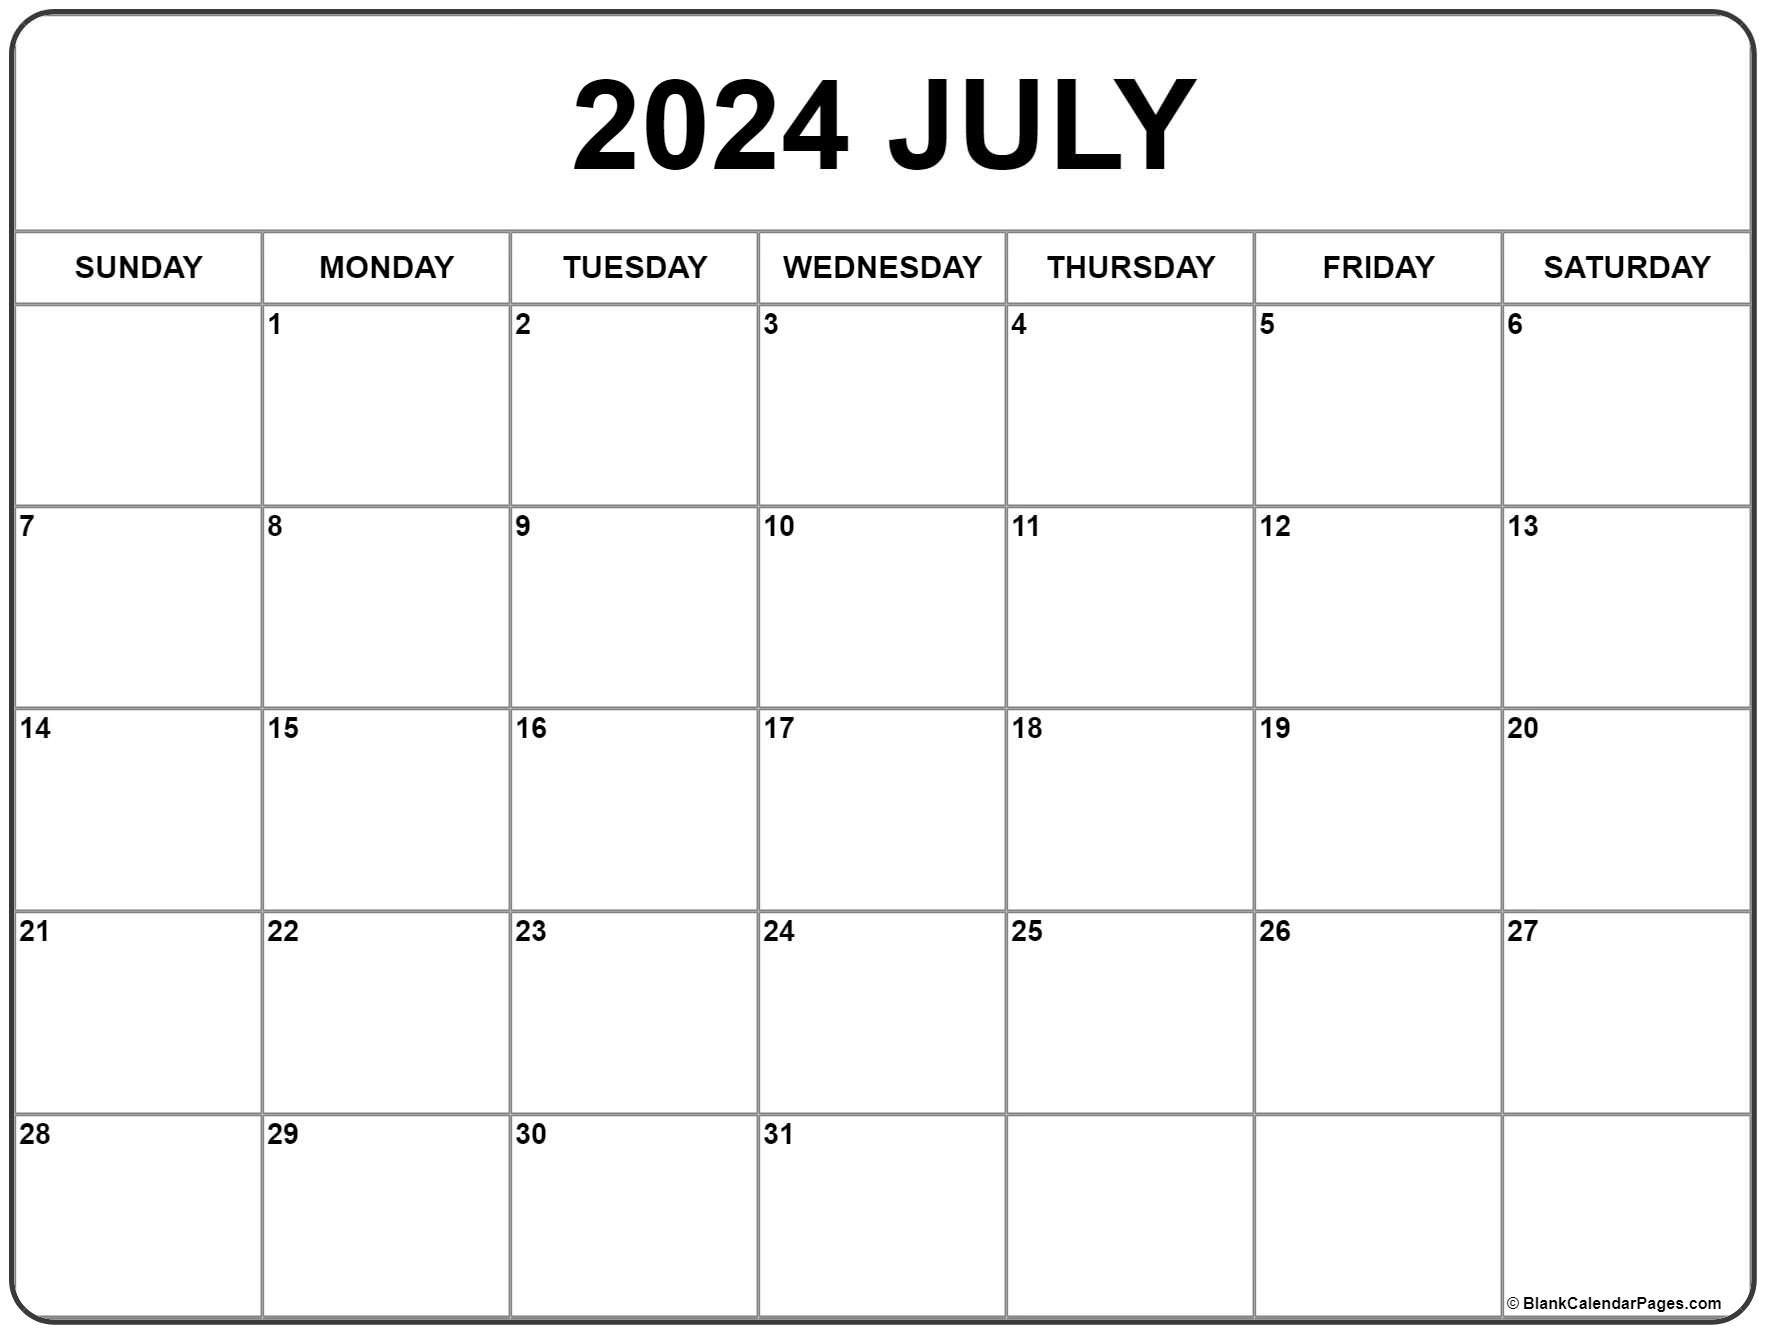 July 2024 Calendar | Free Printable Calendar | Blank Calendar Page July 2024